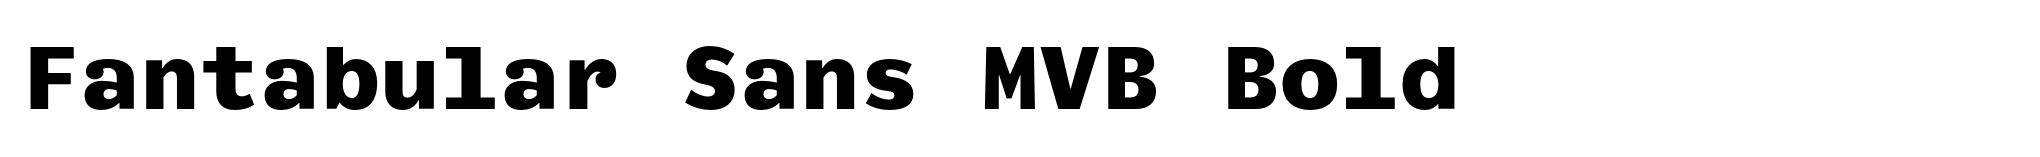 Fantabular Sans MVB Bold image